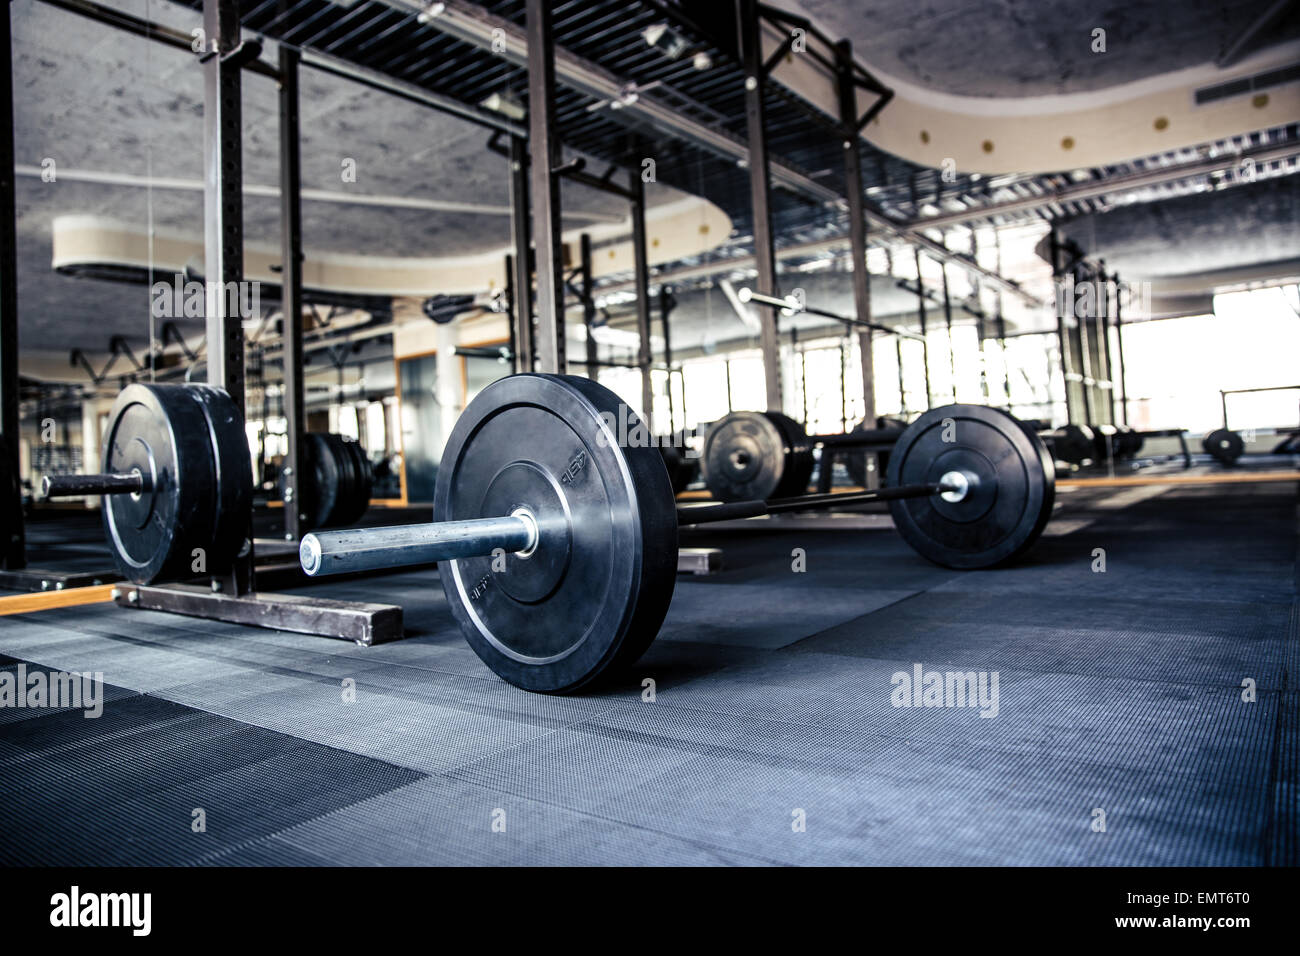 Closeup image of a gym interior with equipment Stock Photo